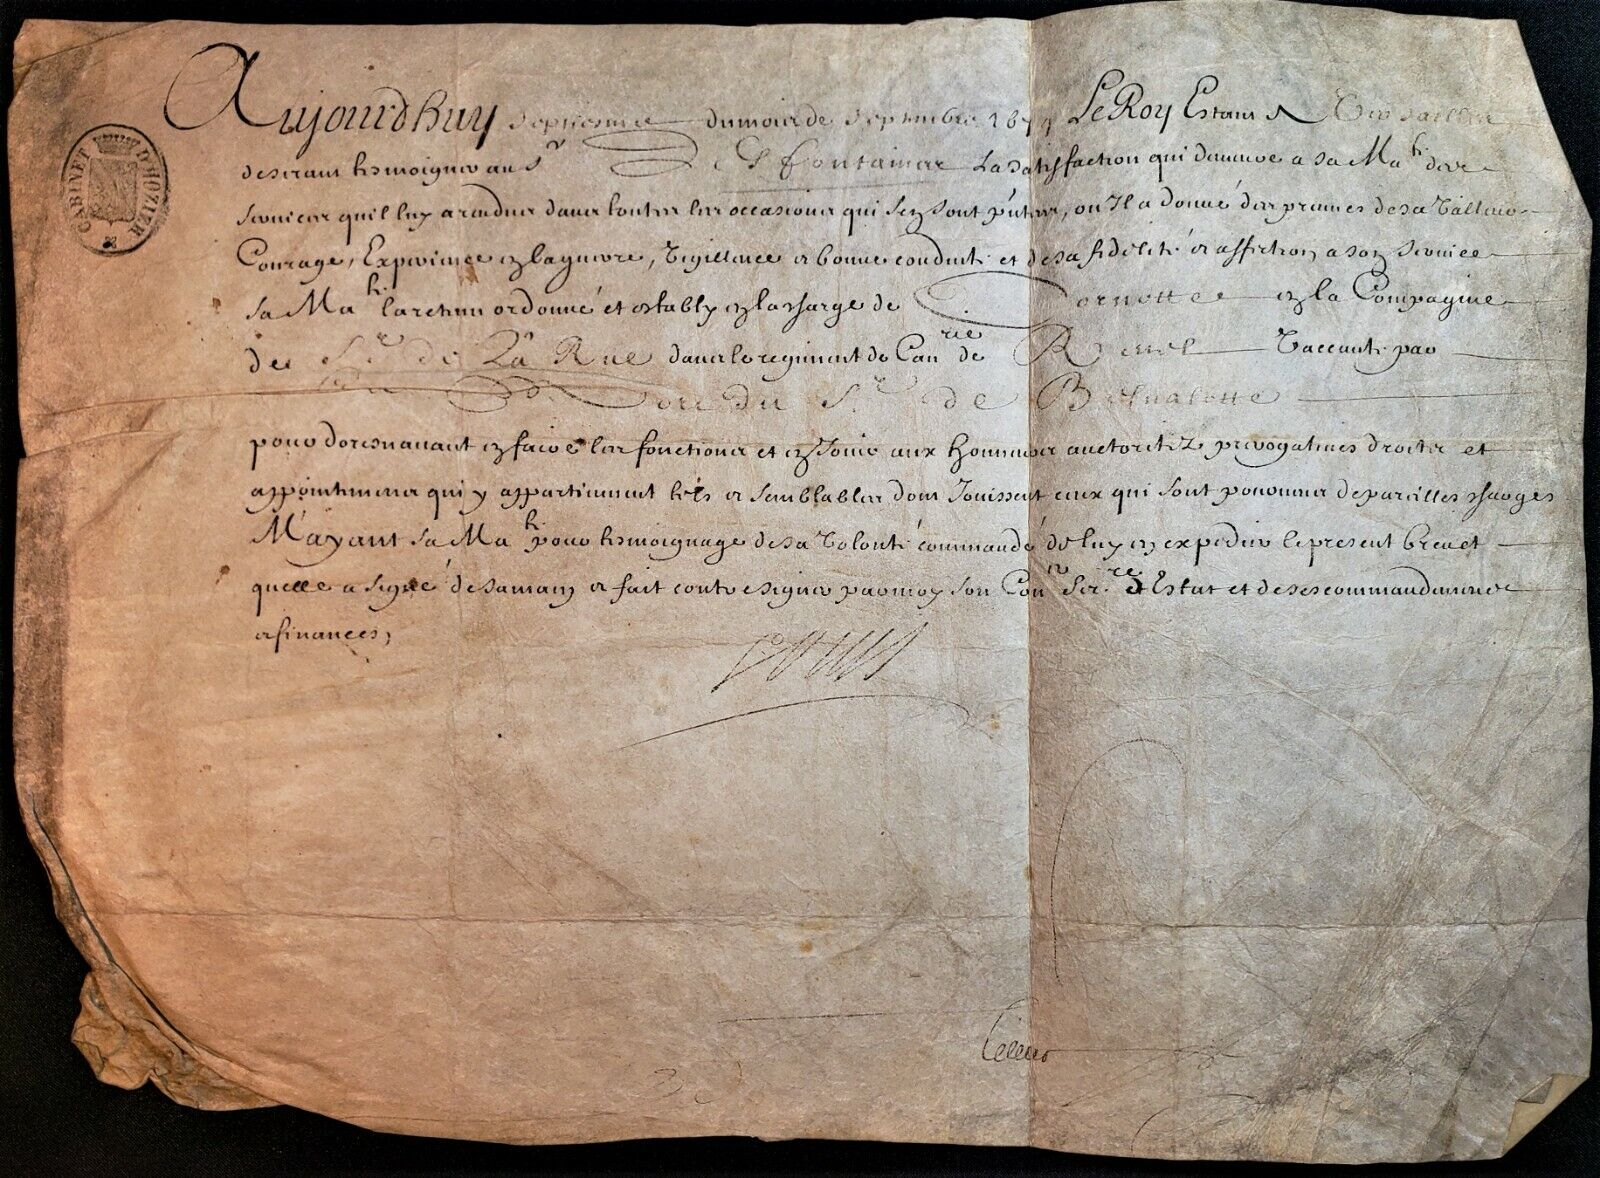 KING LOUIS XIV SIGNED PATENT FOR CORNETT LIEUTENANT 1674 König von Frankreich